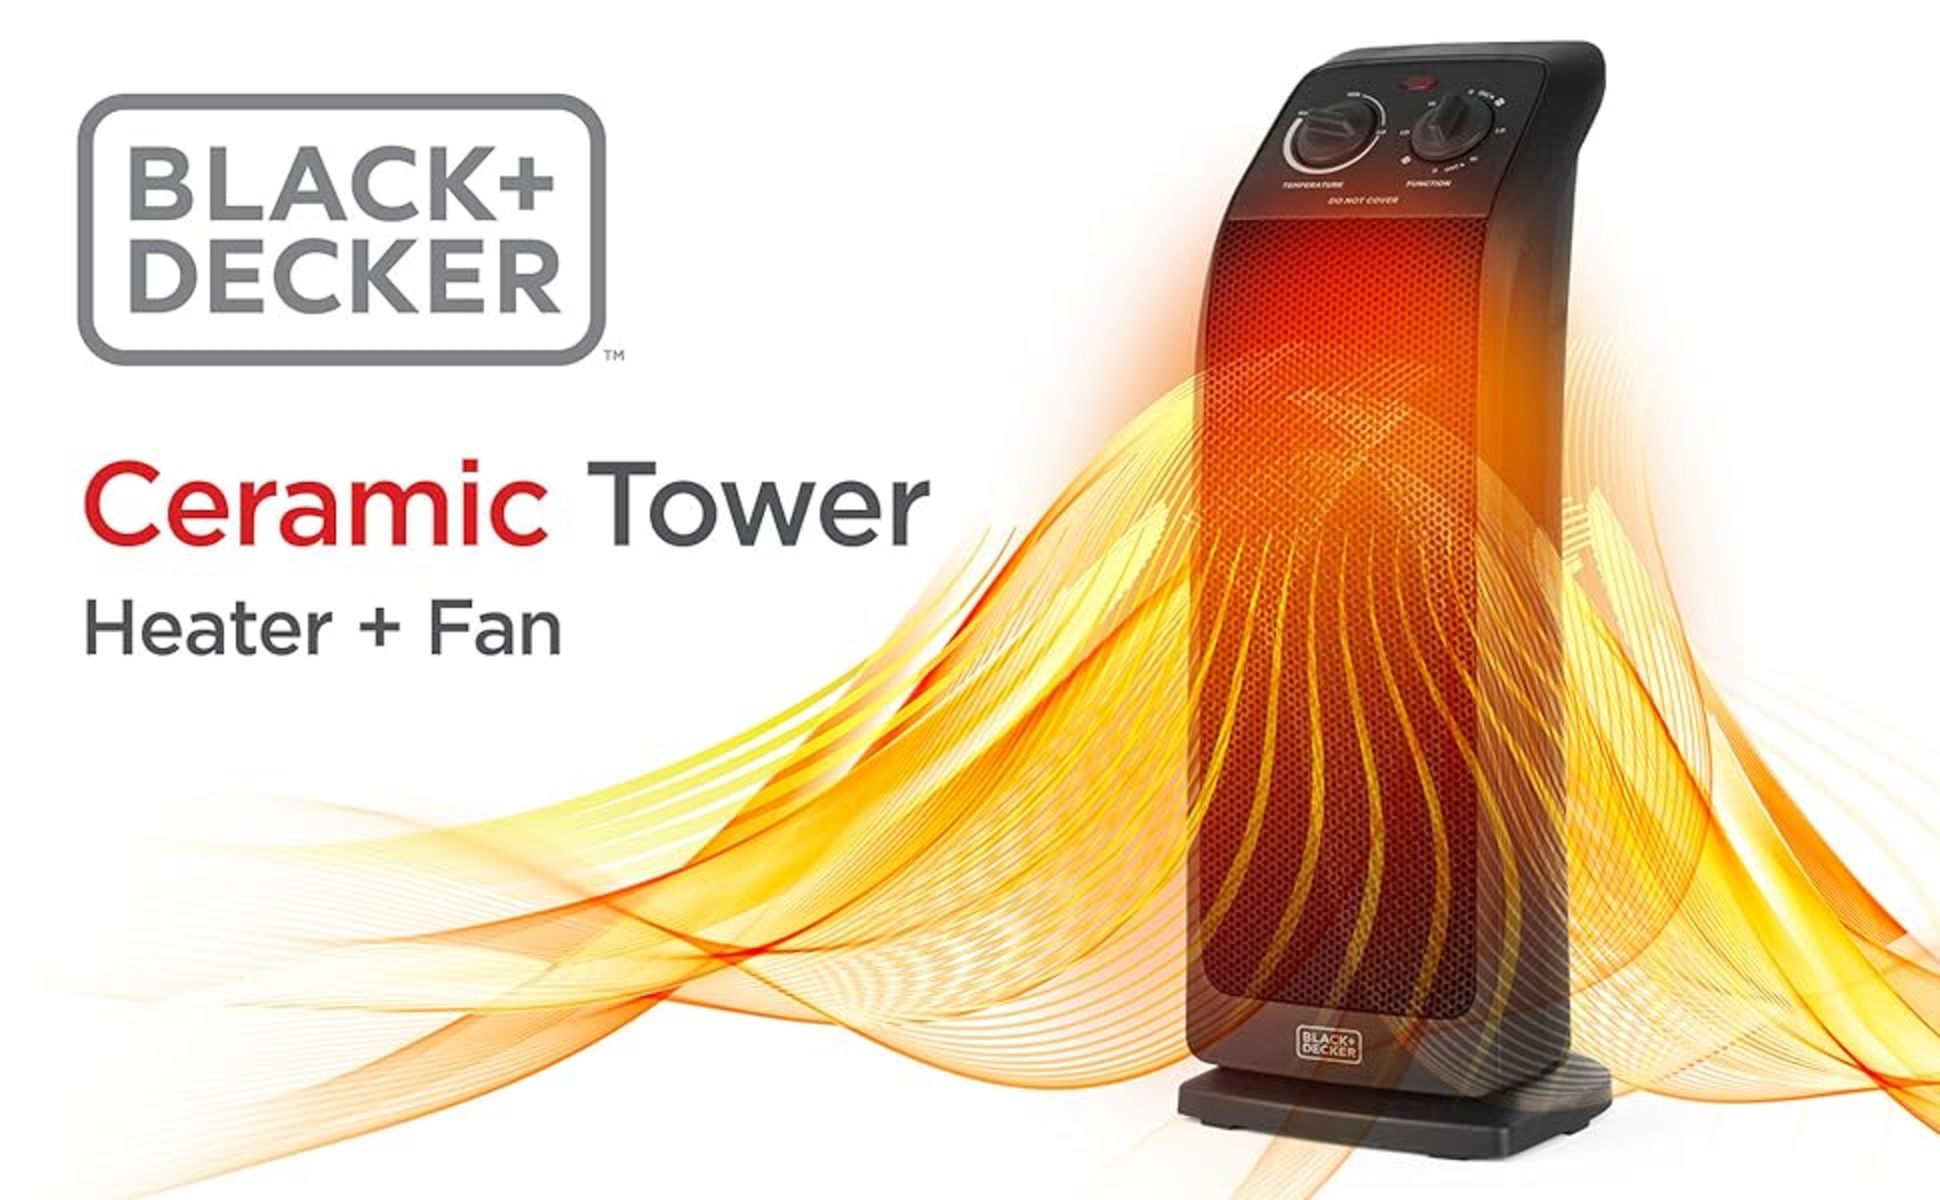 Black+decker Ceramic Tower Heater : Target